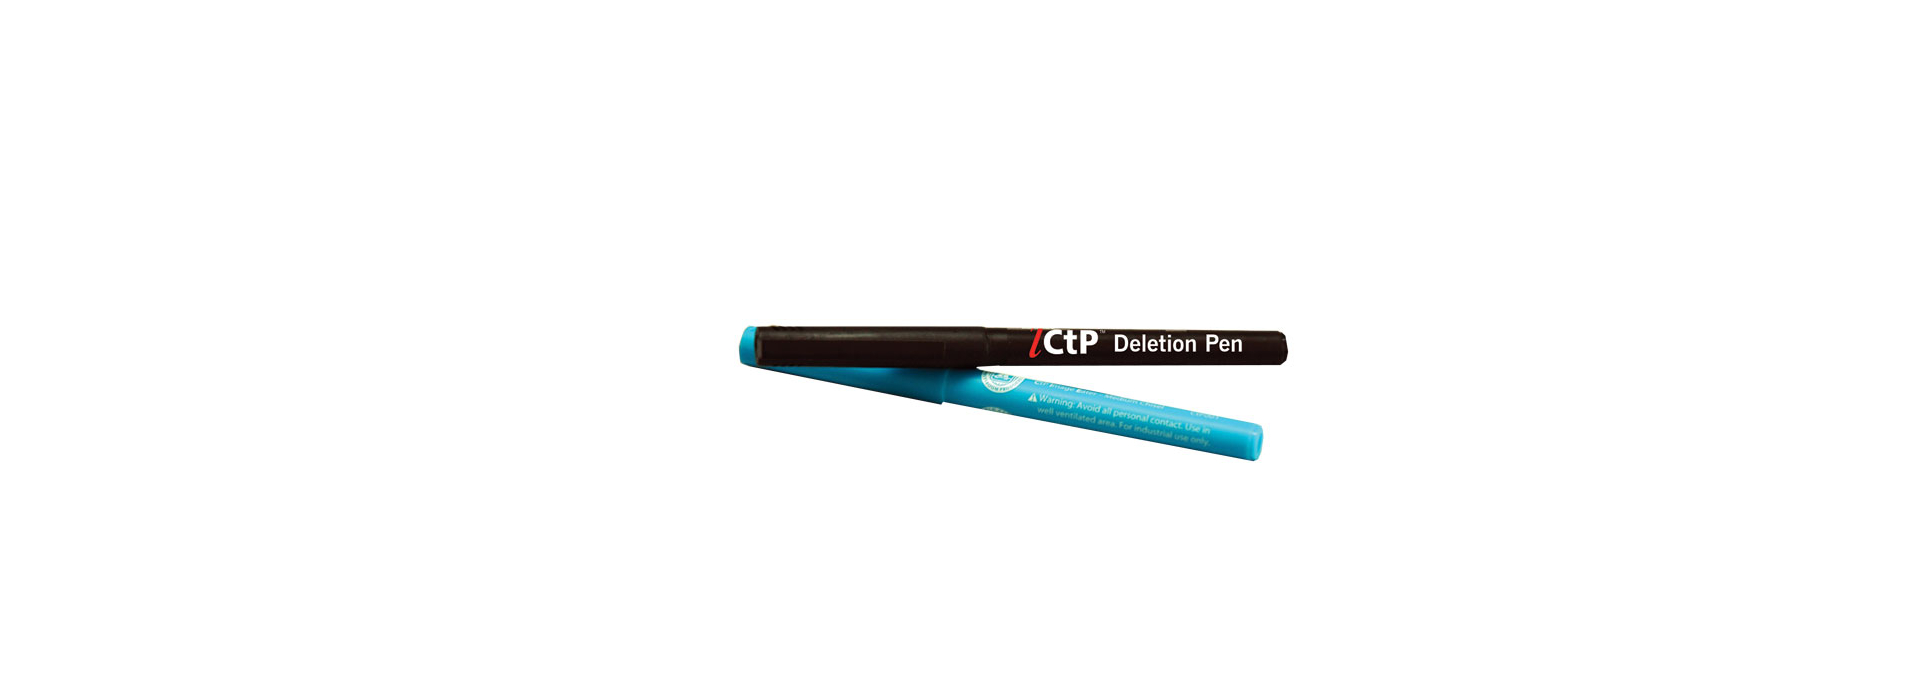 iCtP Deletion Pens